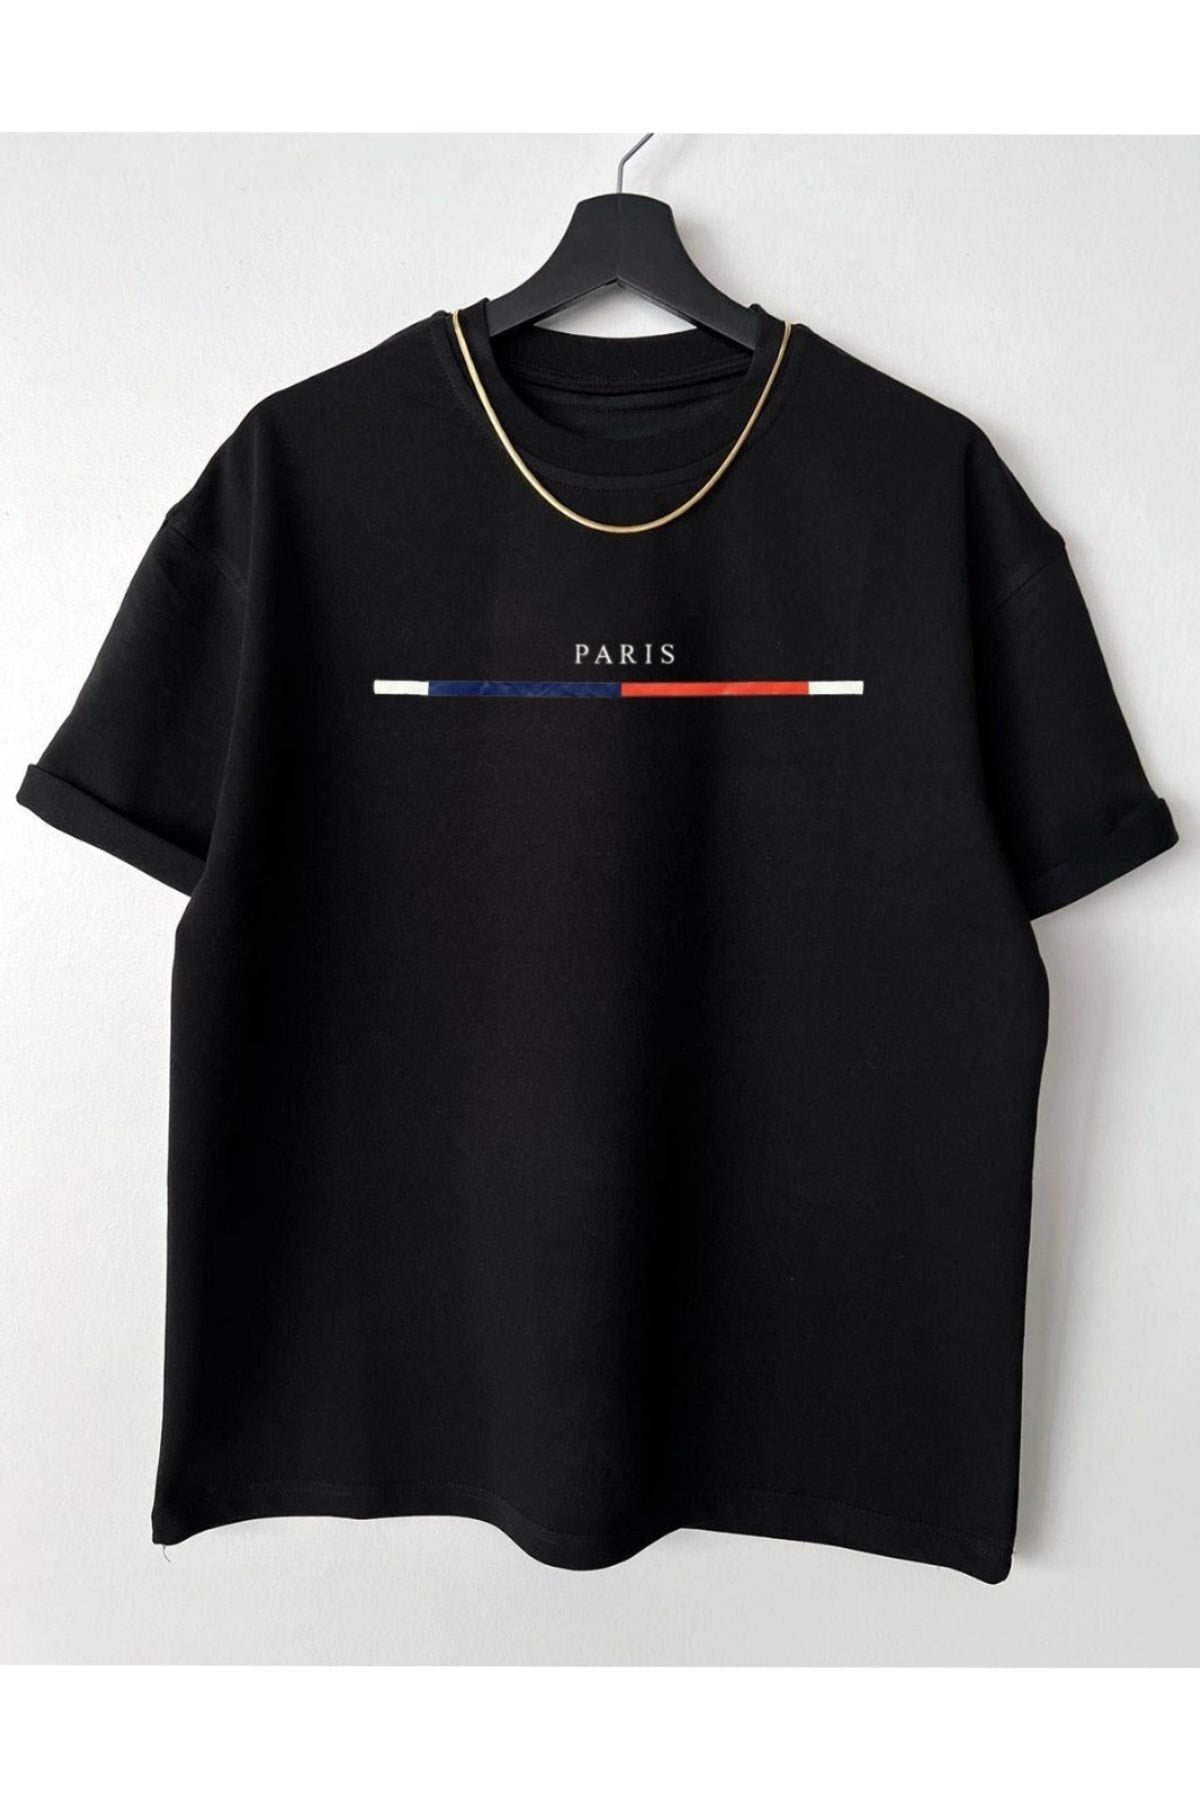 Men's Black Chest Slim Stripe Paris Printed Oversize Crew Neck T-Shirt